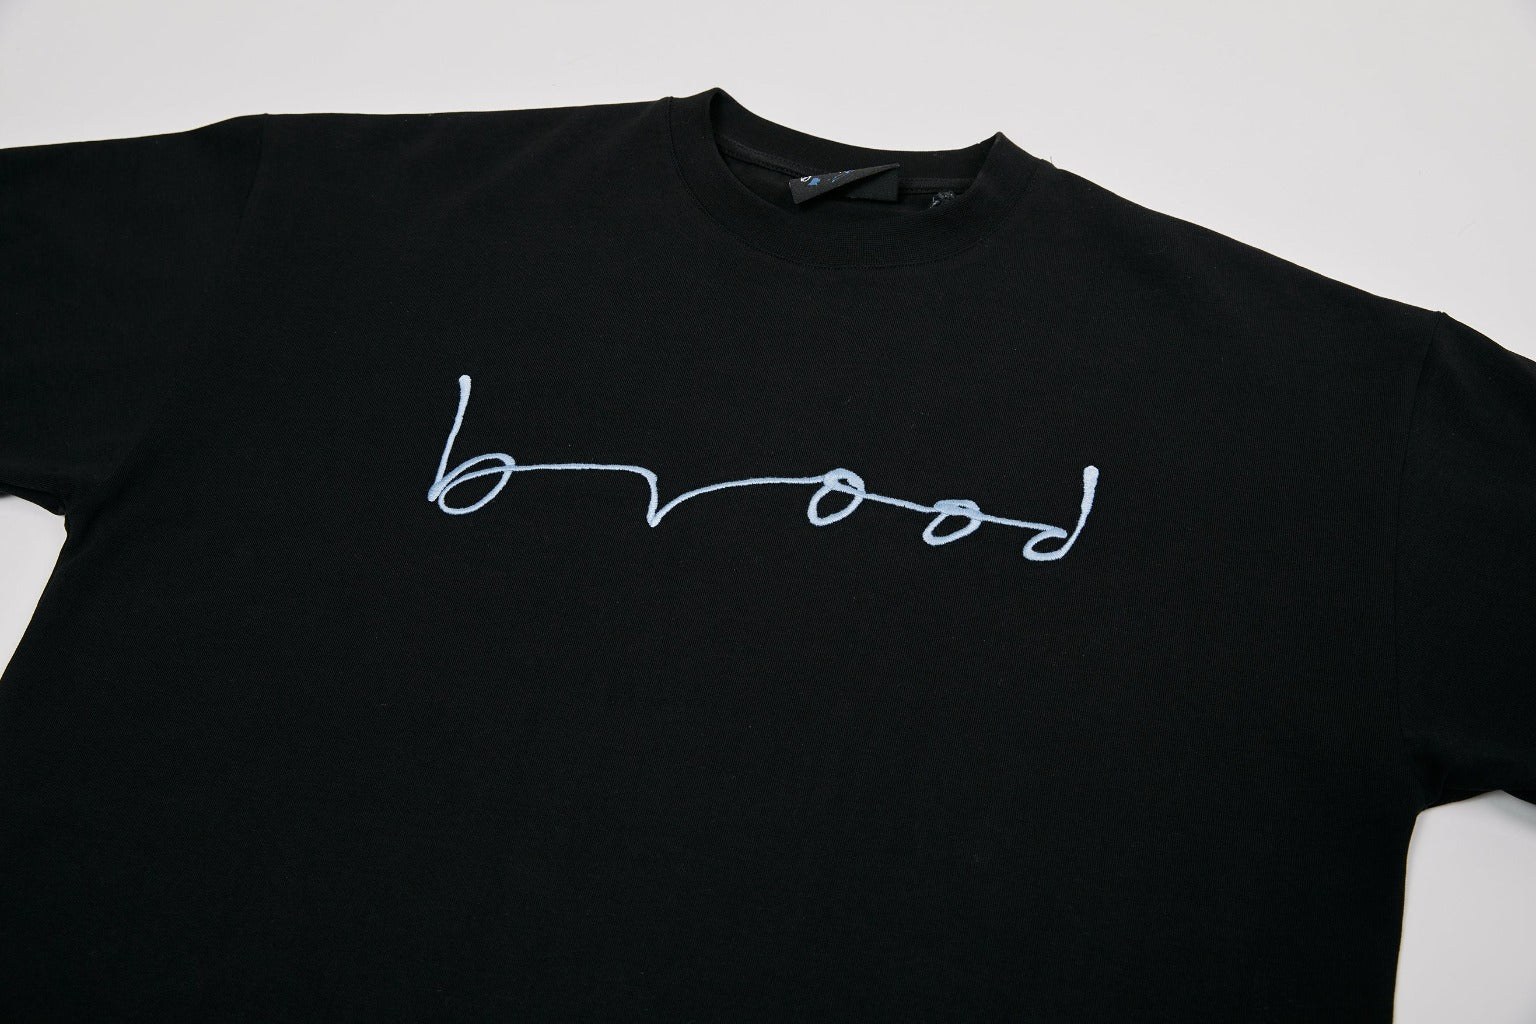 brood logo